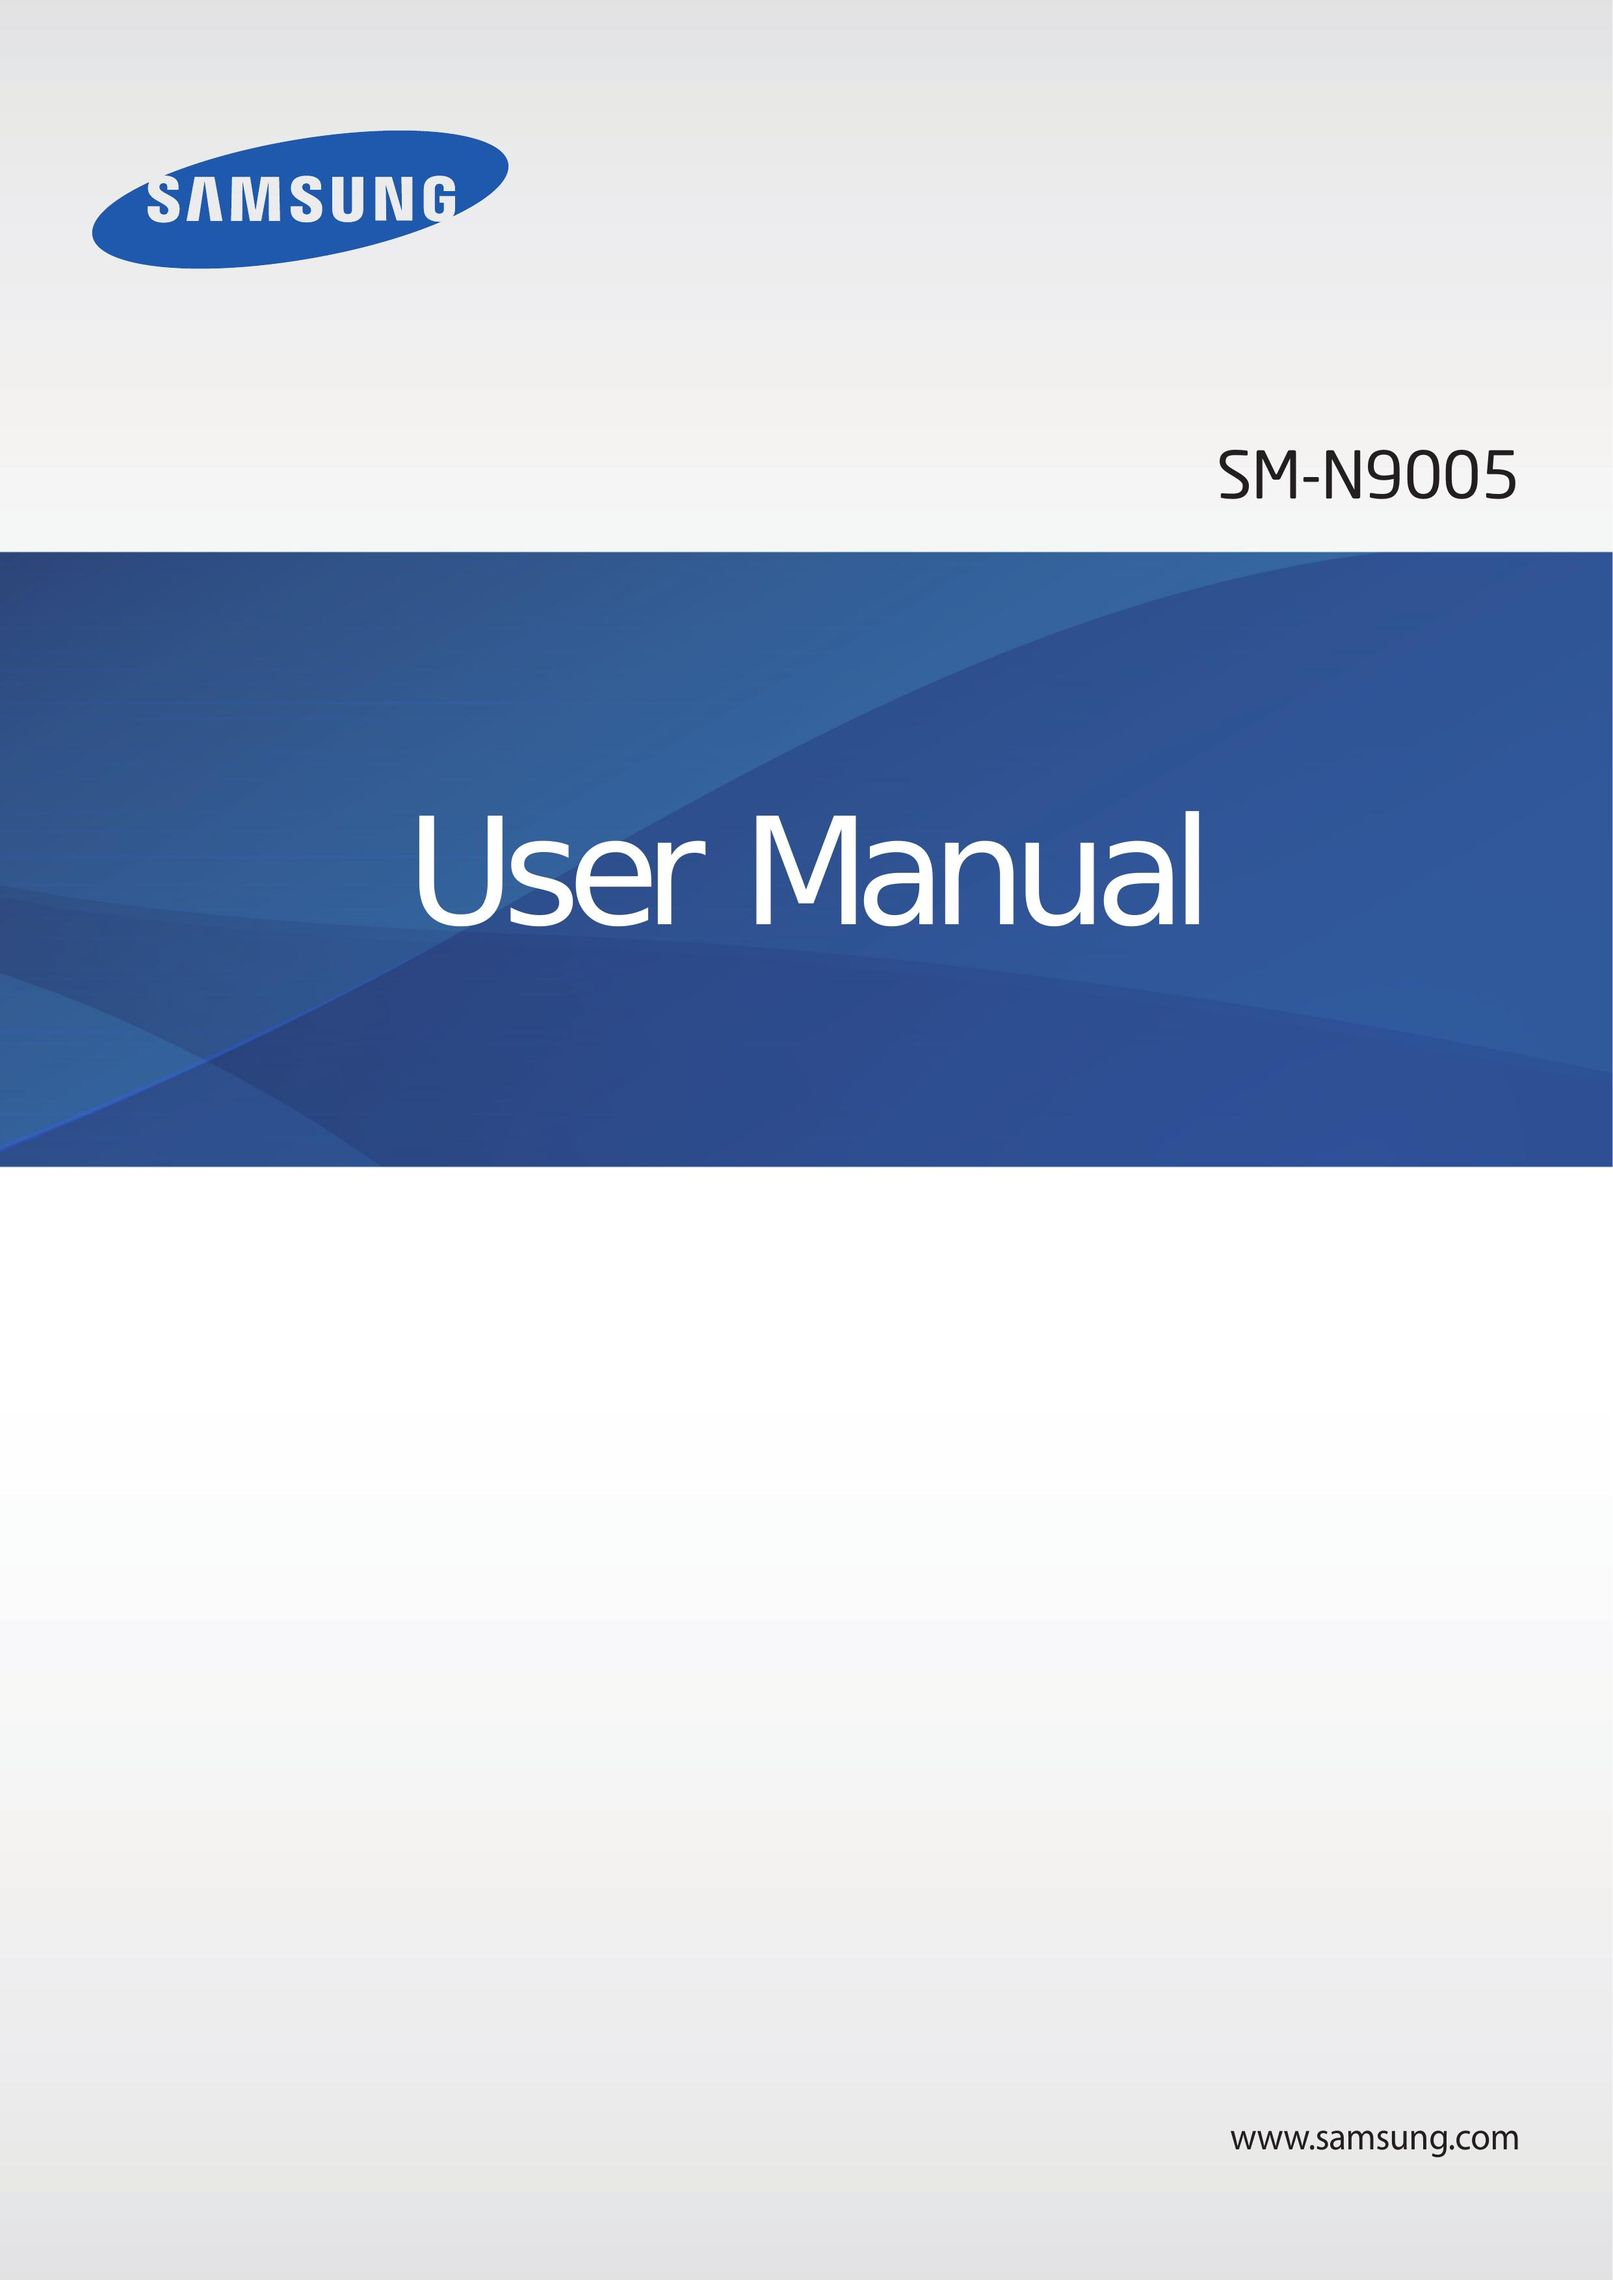 Samsung SM-N9005 Graphics Tablet User Manual